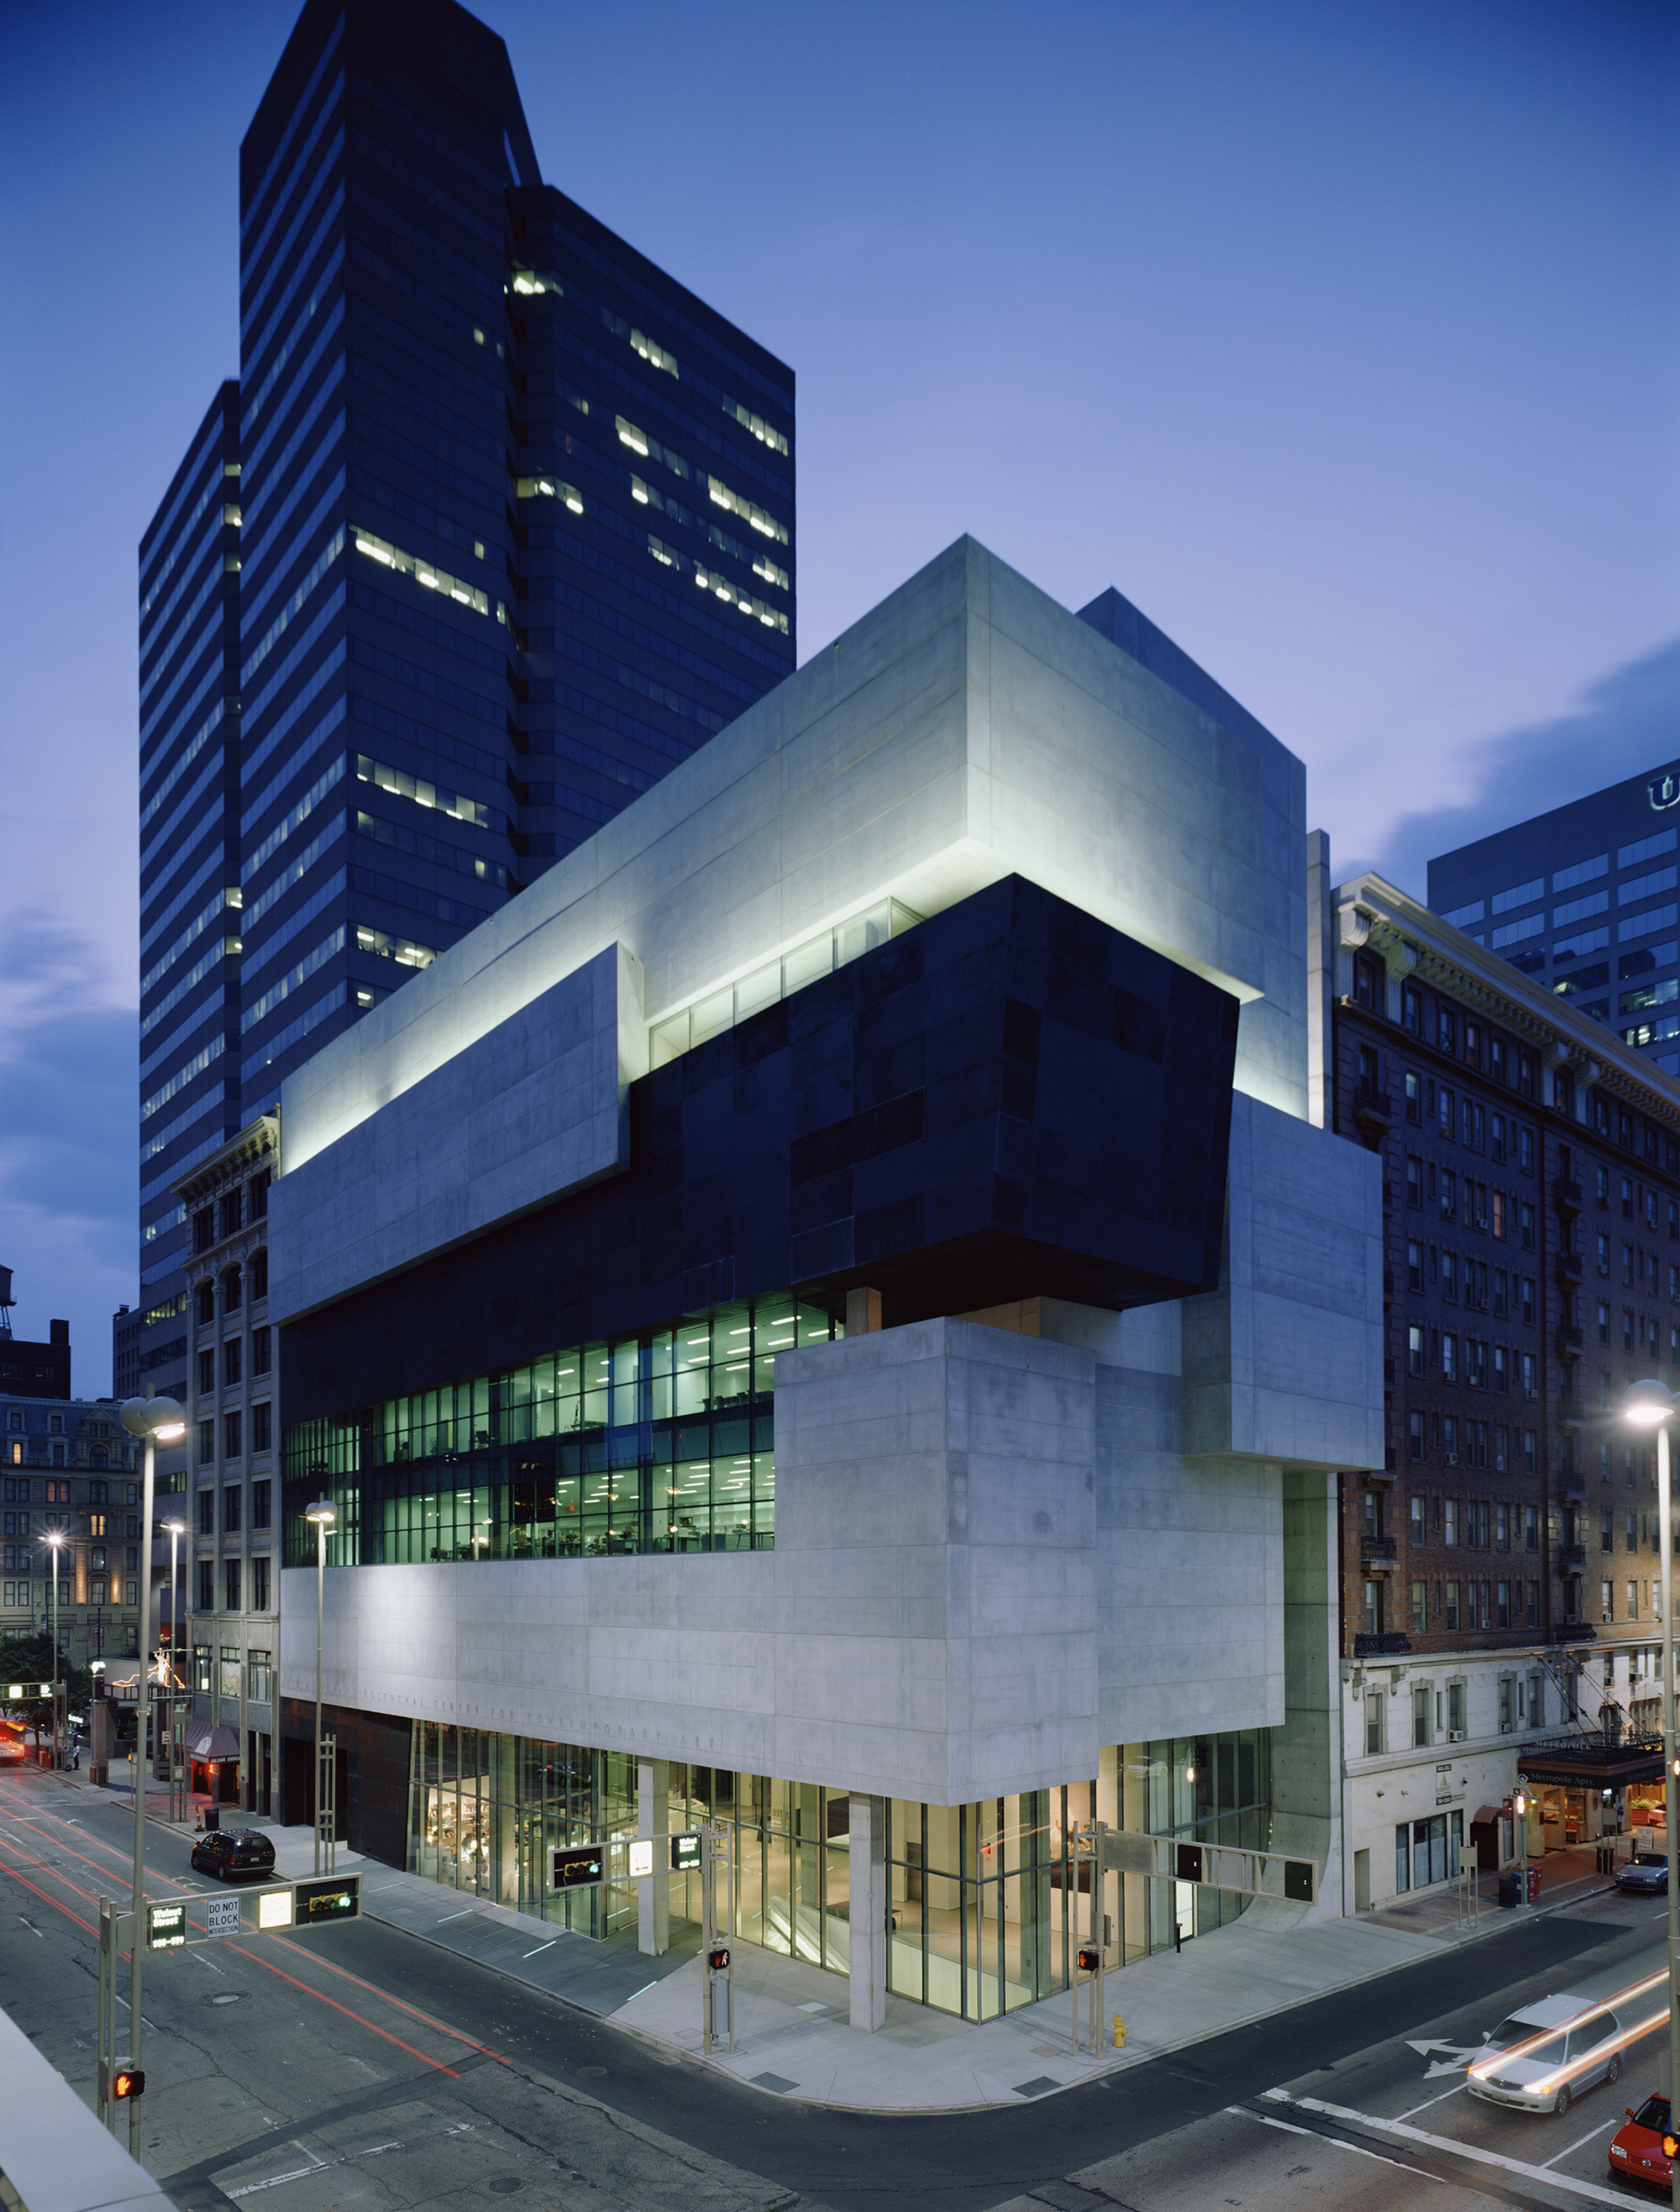 Contemporary Arts Center in Cincinnati, Ohio.